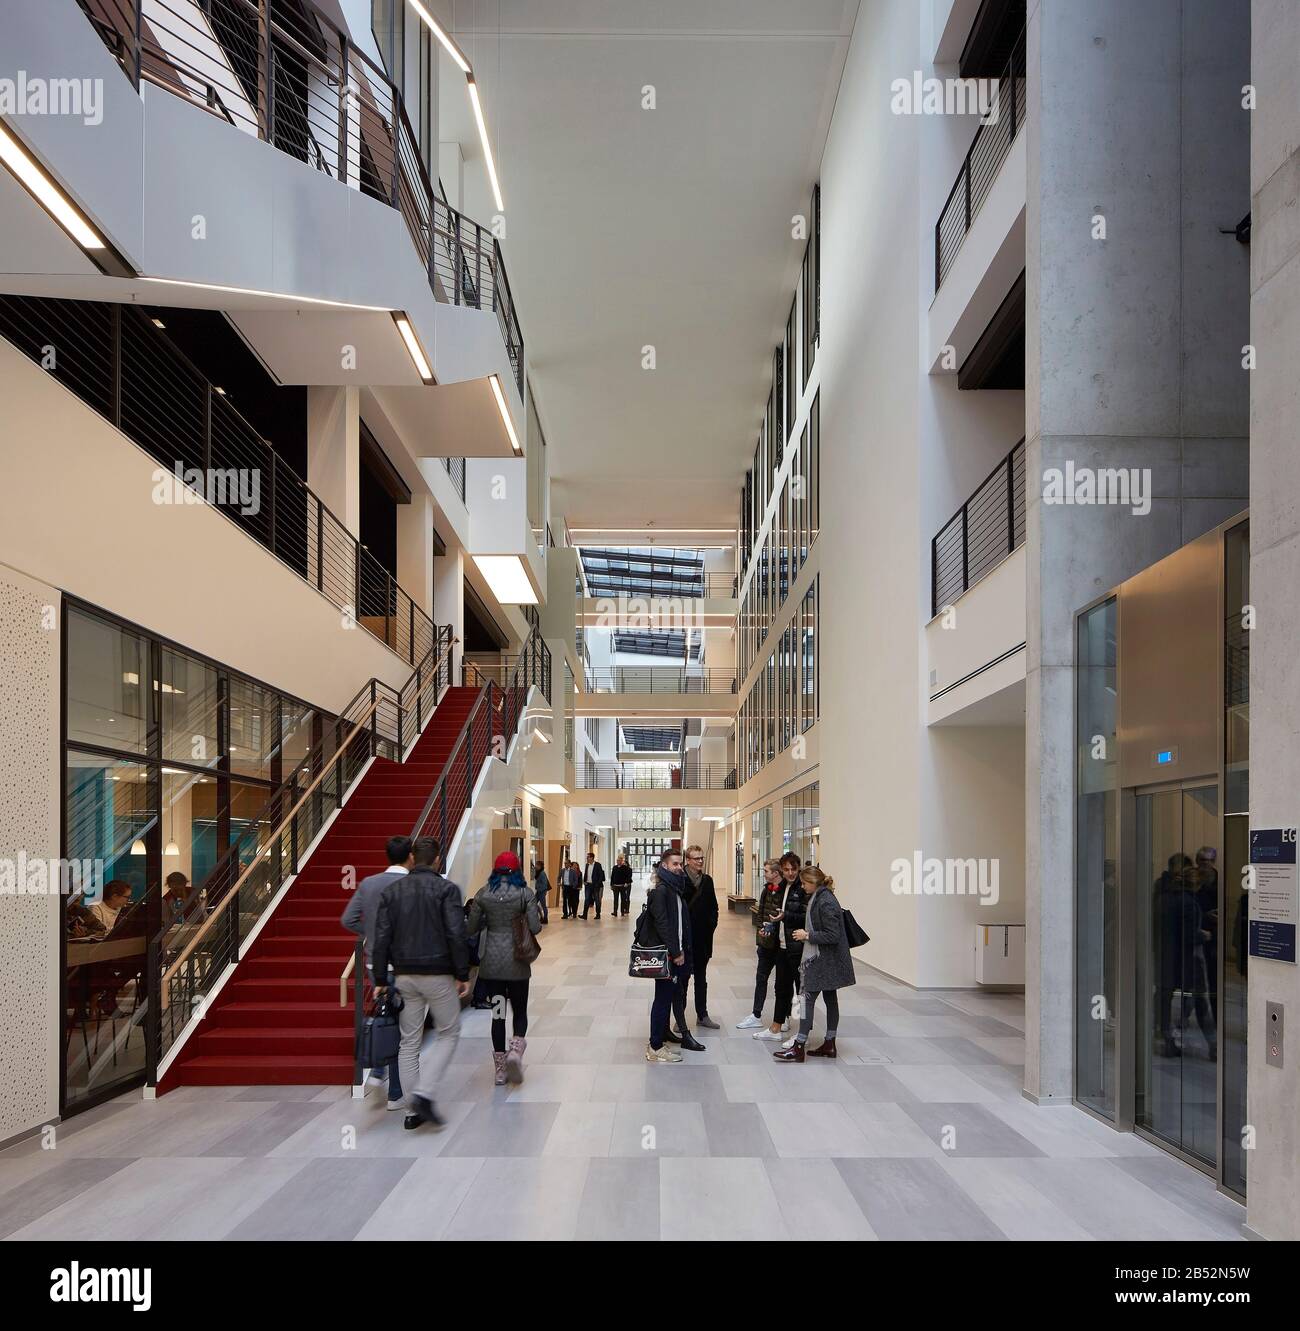 Linking hallway 'Street of Knowledge'. Frankfurt School of Finance and Management, Frankfurt am Main, Germany. Architect: Henning Larsen, 2017. Stock Photo